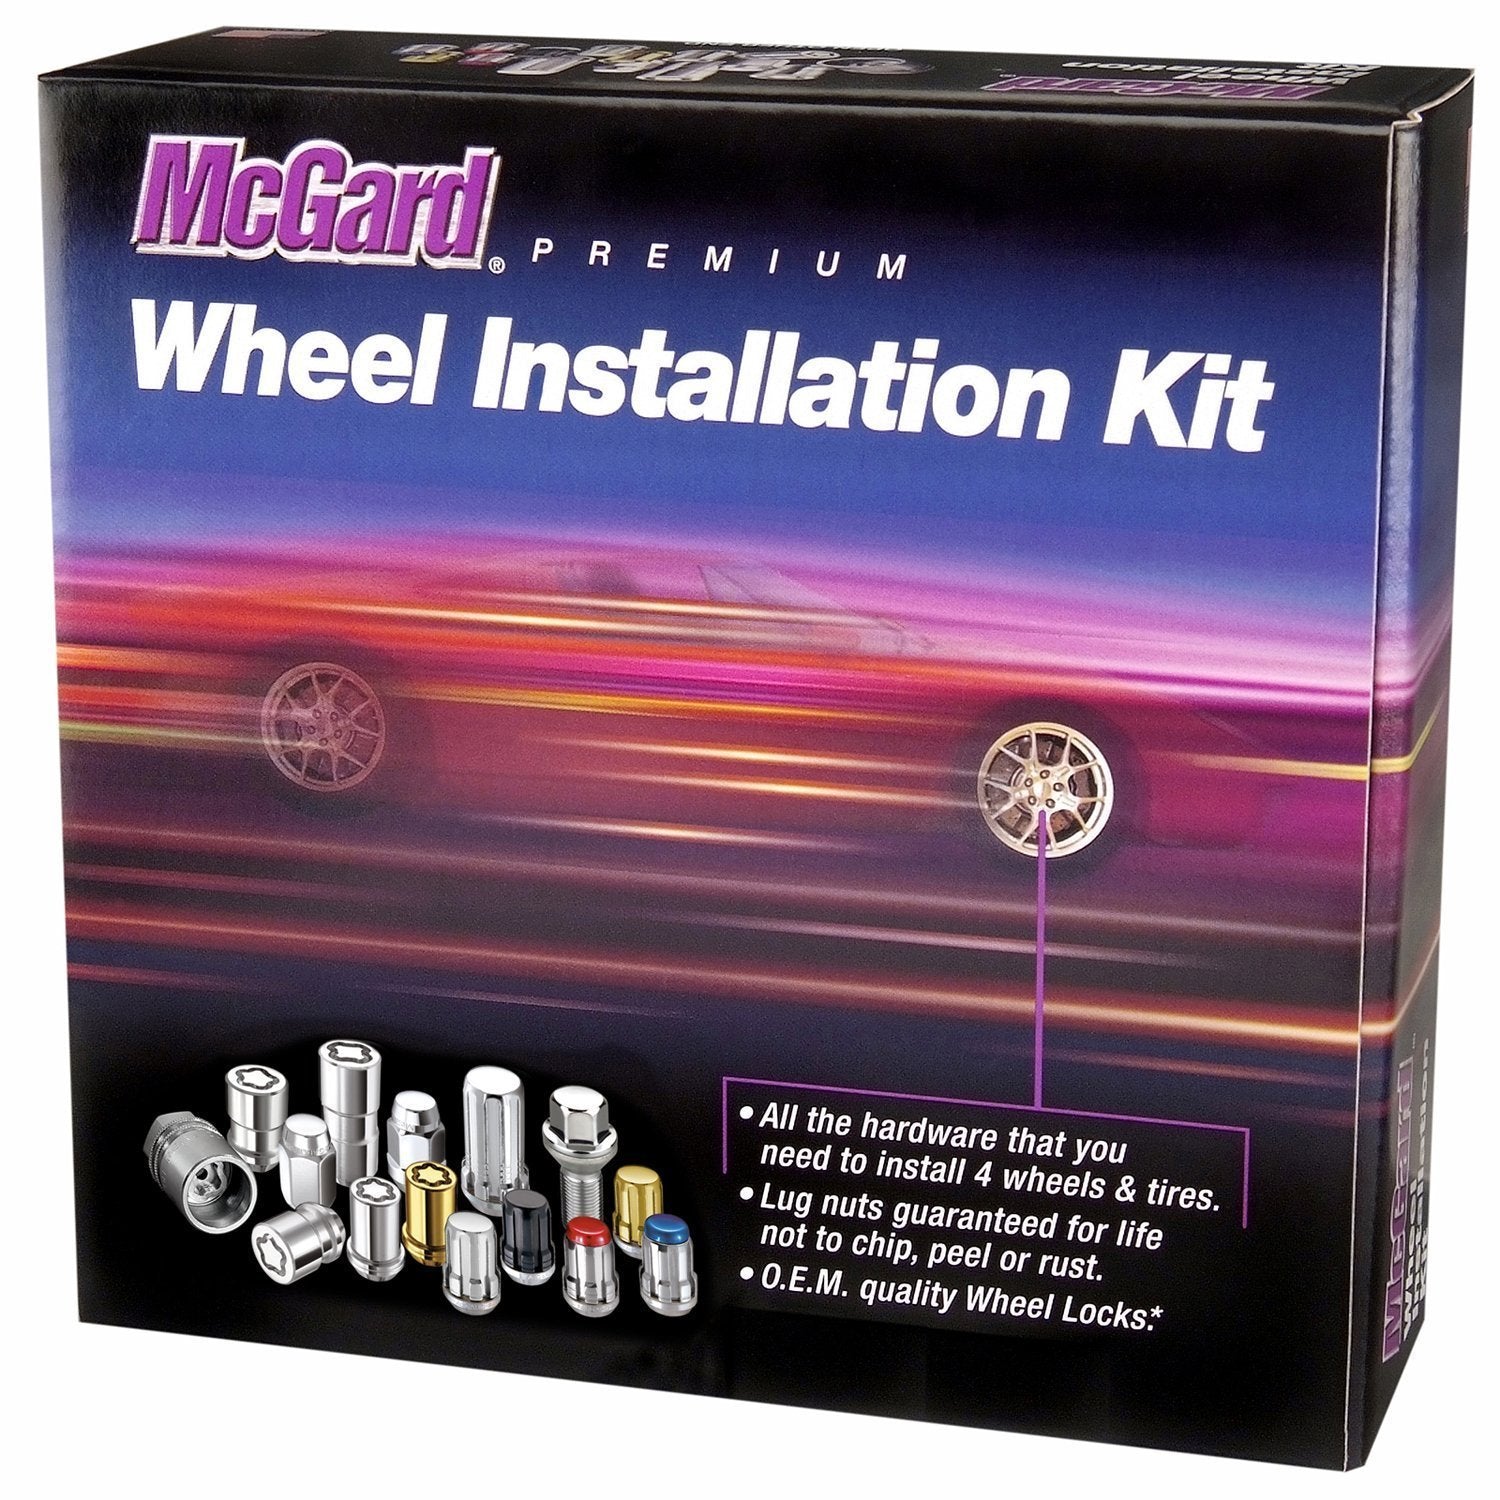 McGard, McGard Cone Seat Exposed Style Wheel Installation Kit / Chrome (84532)